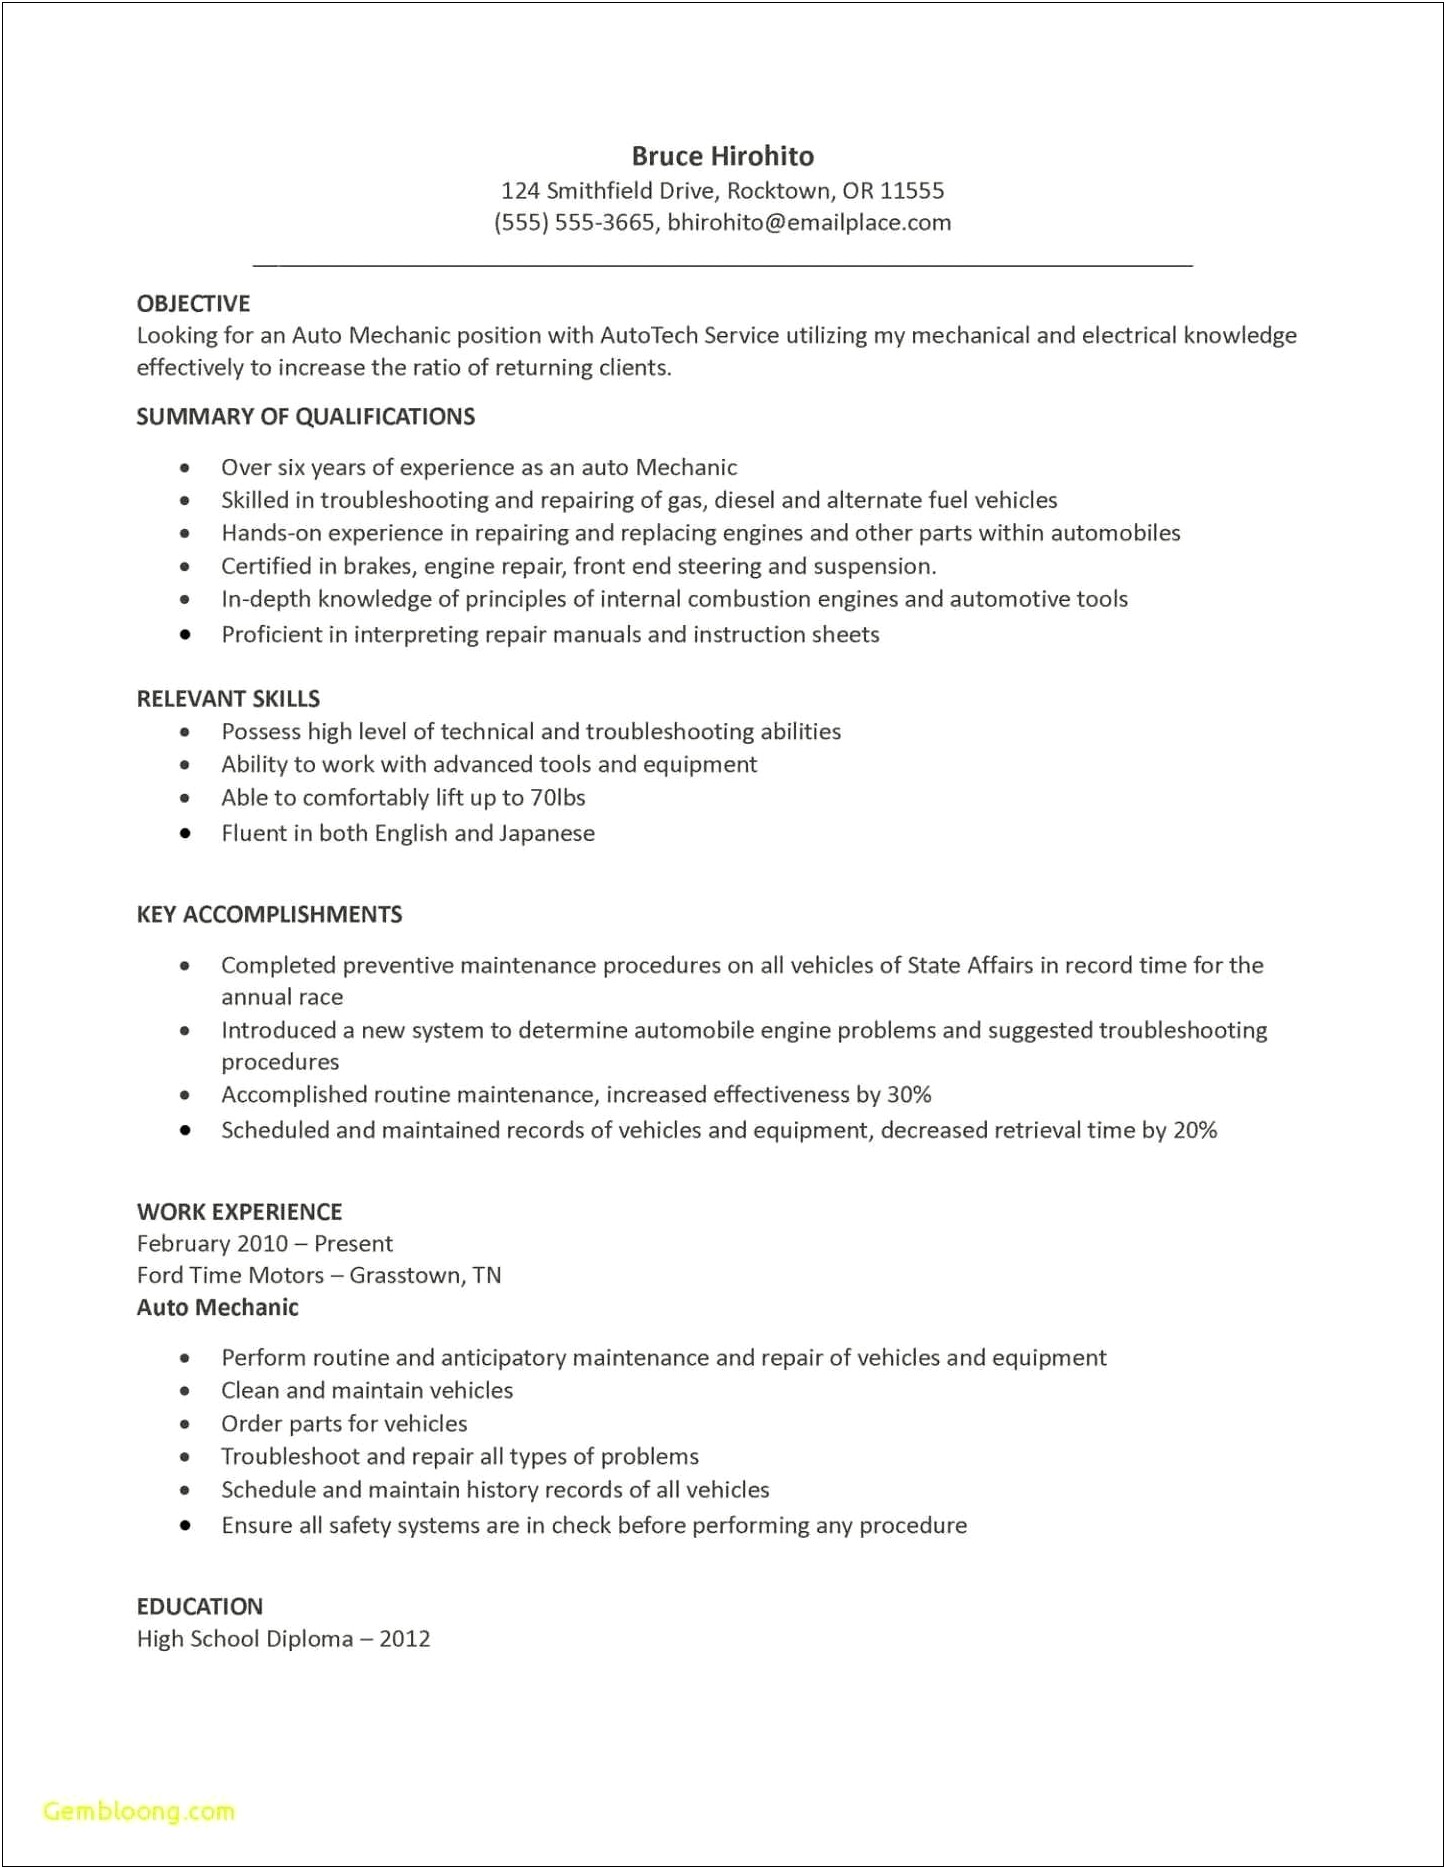 Job Description For Hvac Work For Resume